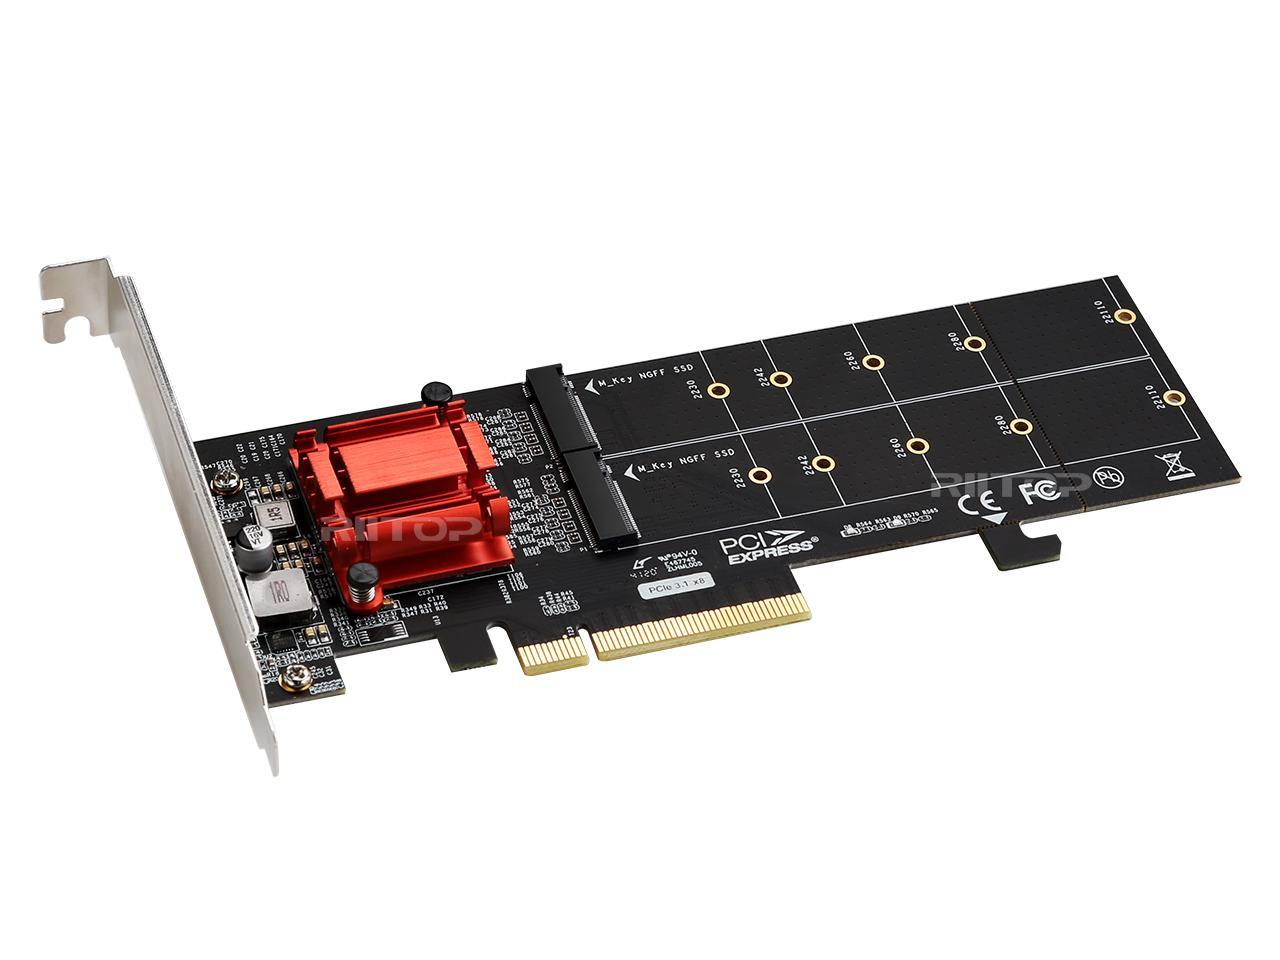 Dual NVe PCIe Adapter, RIITOP (2 Ports) .2 NVe SSD to PCI-e Express .